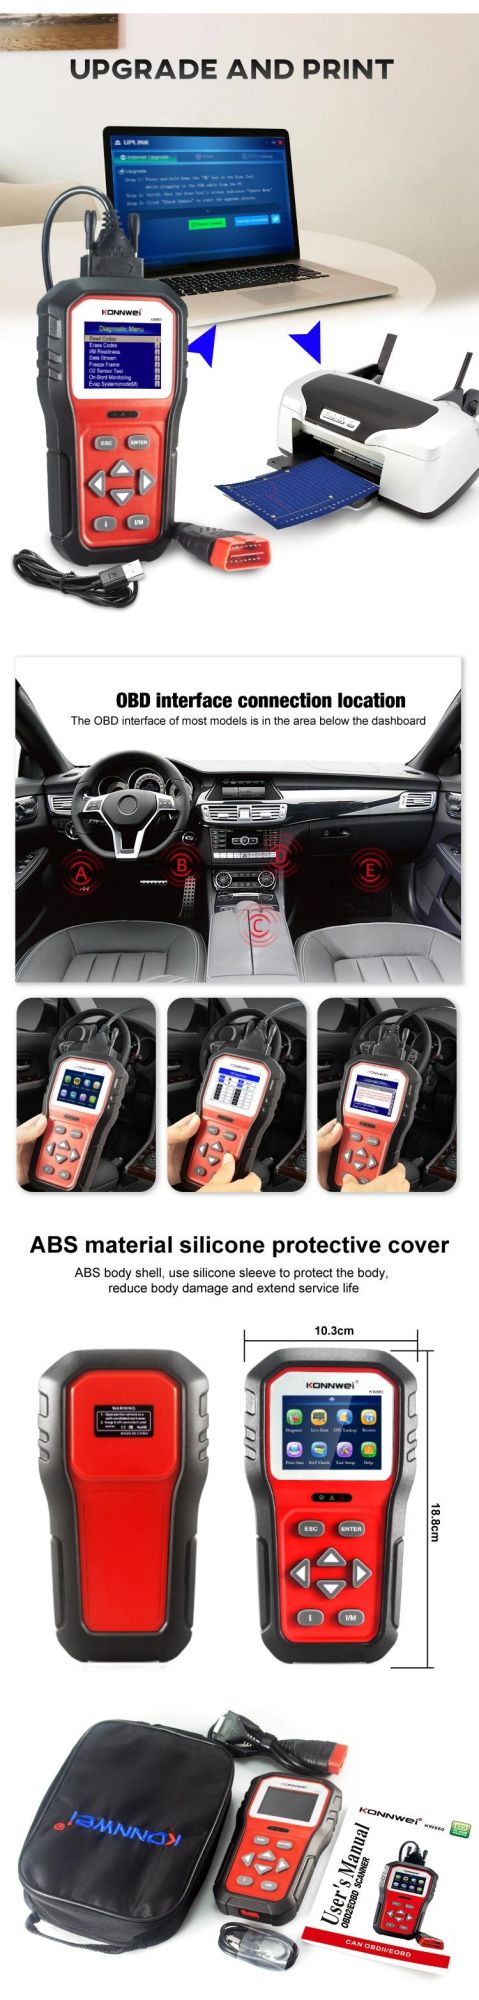 Konnwei Kw860 OBD2 Scanner OBD2 Car Diagnostic Auto Diagnostic Scan Tool Read & Clear Fault Error Codes OBD2 Automotive Scanner